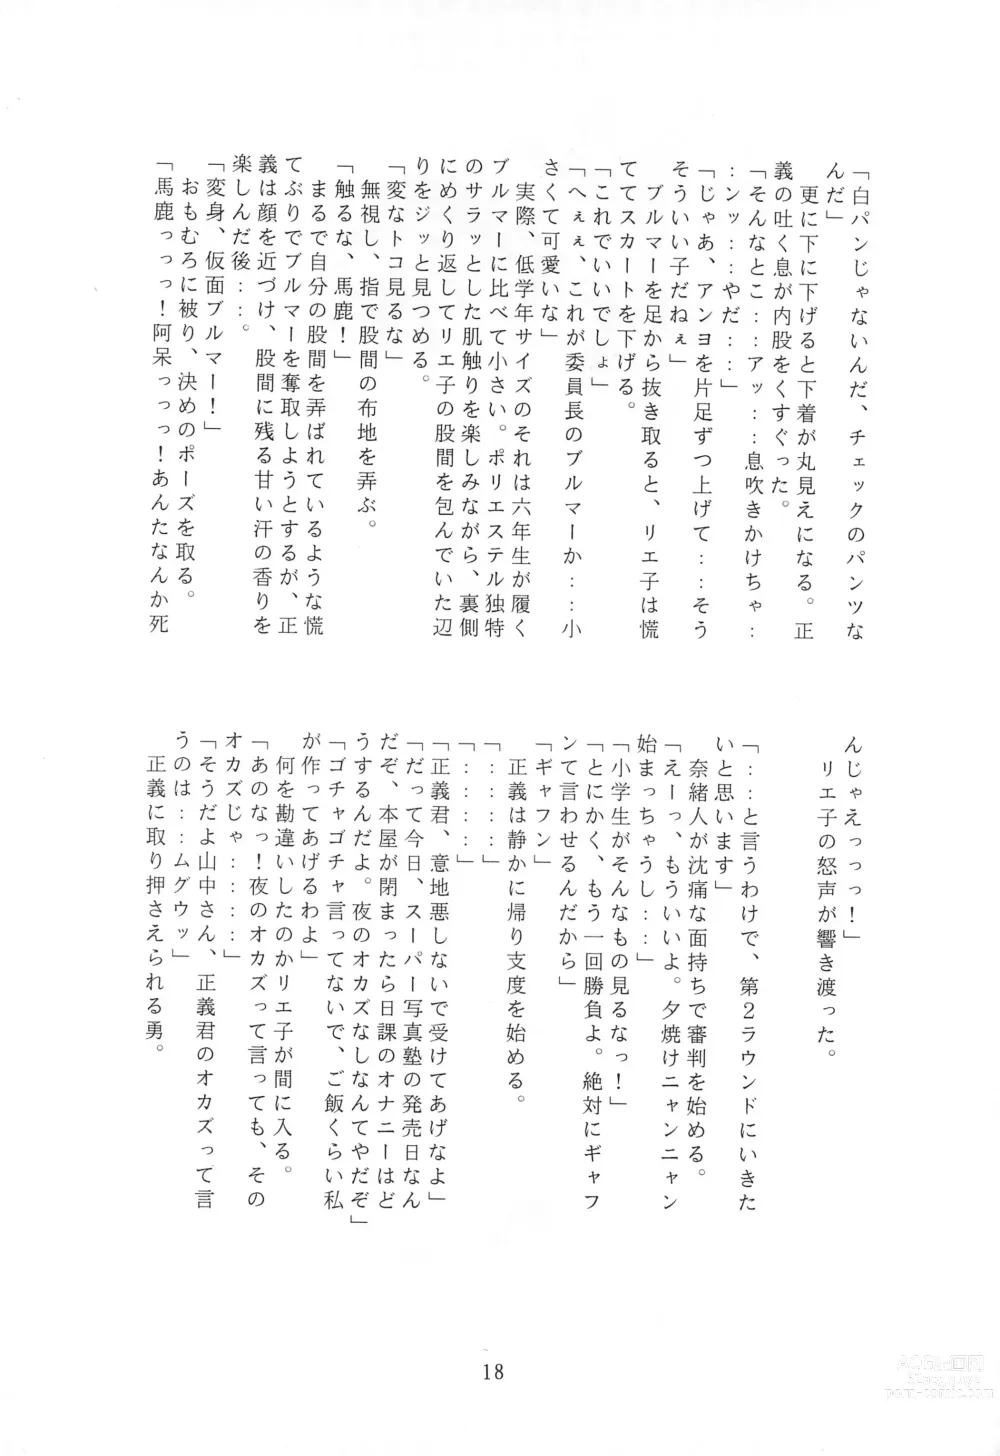 Page 18 of doujinshi JANGLE ONI Mermaid